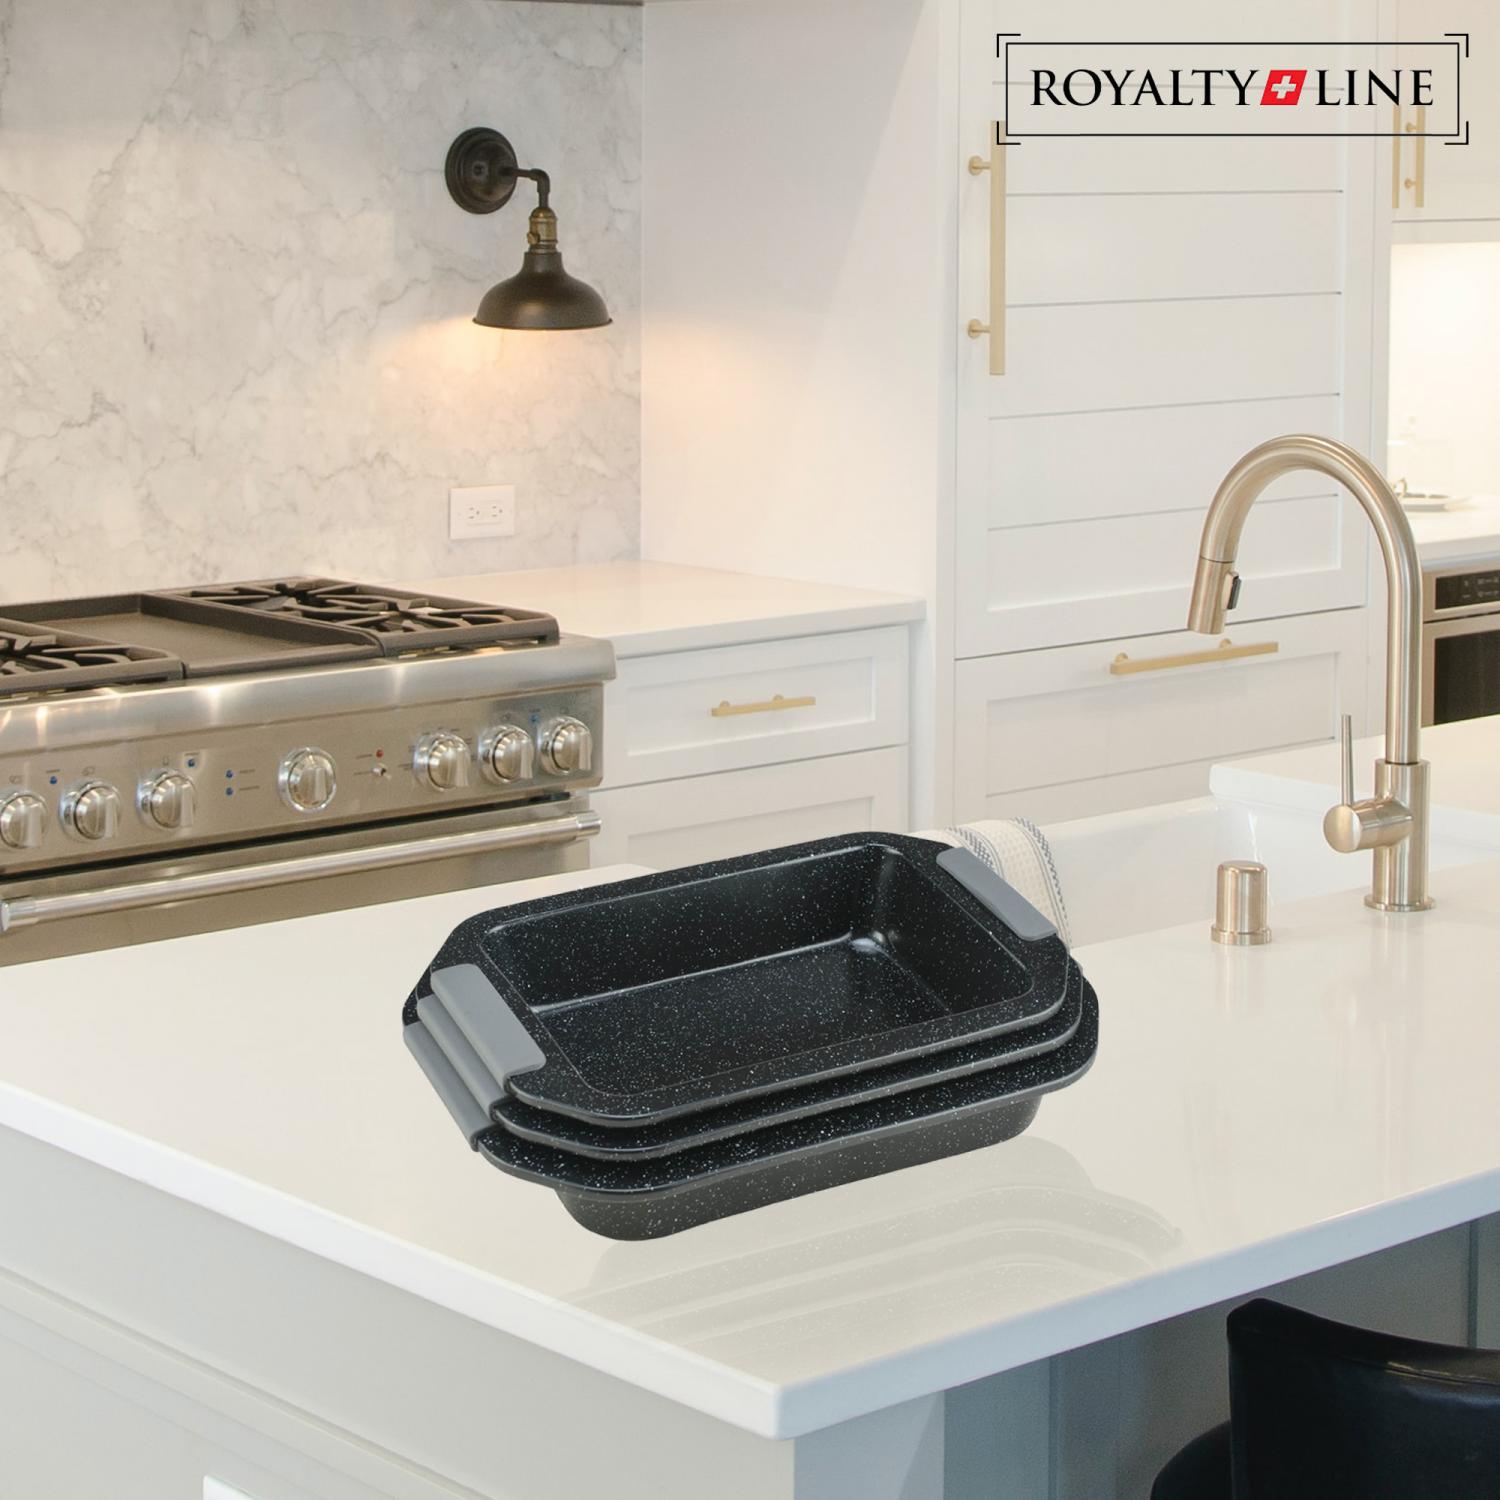 Royalty Line RL-MM3B: 3-Piece Marble Coating Baking Tray